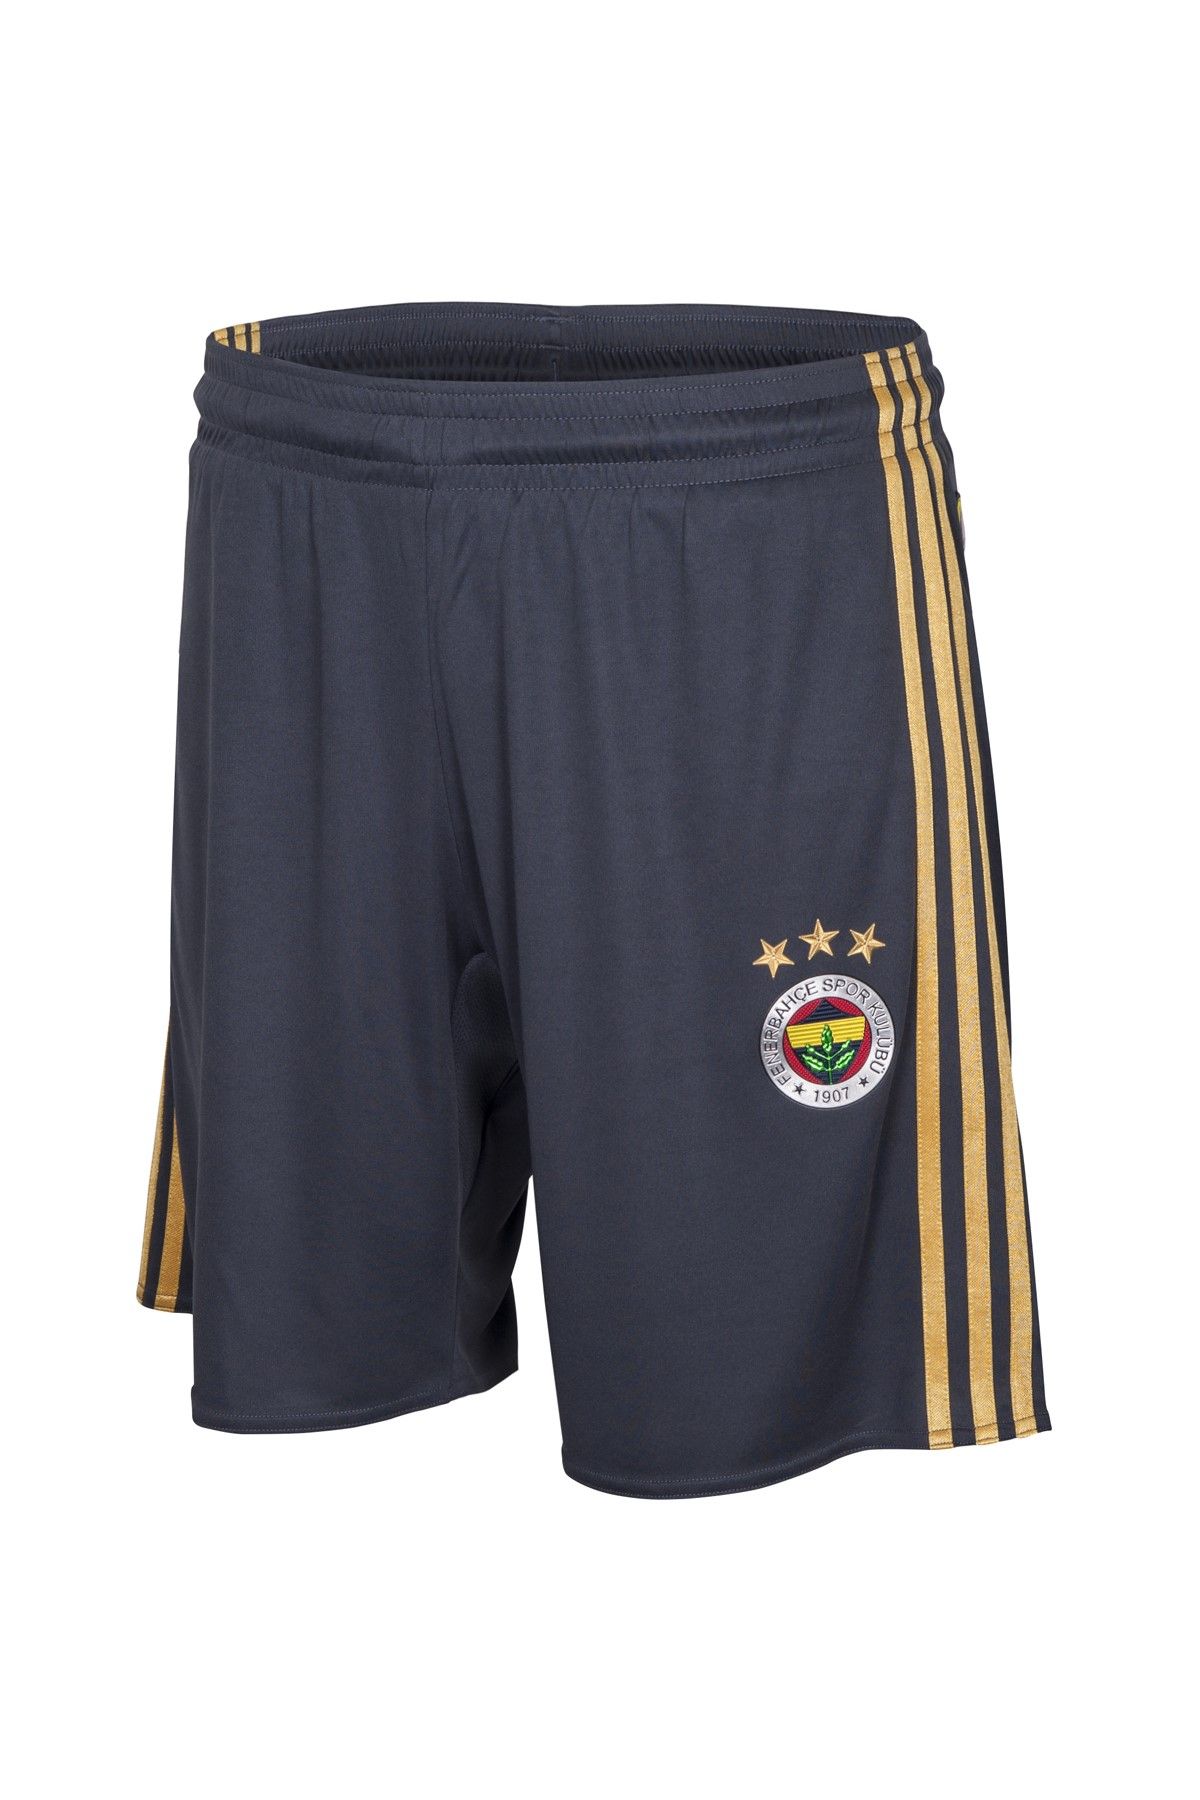 Fenerbahçe adidas Fb 16 Third Sh Rep Lacivert ALTIN Unisex Çocuk Şort 100402709